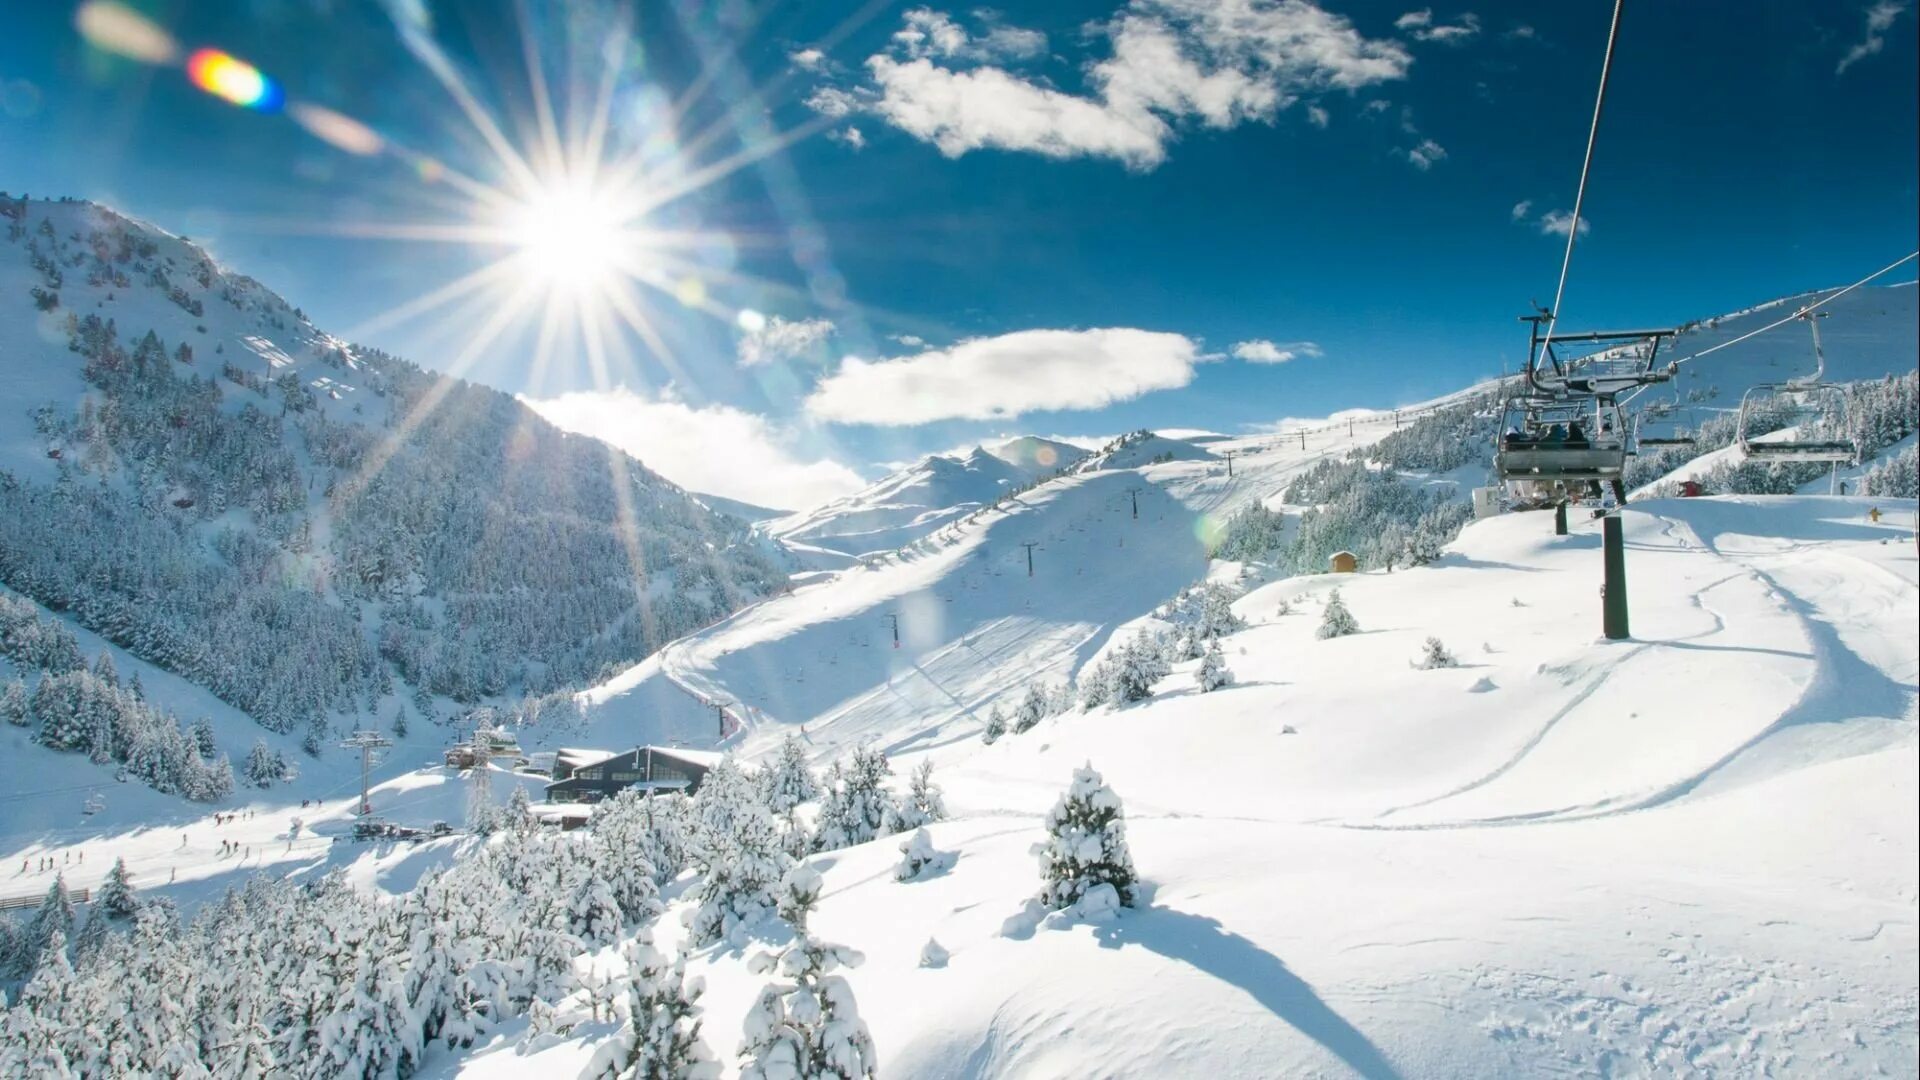 Самый высокий горнолыжный курорт. Андорра горнолыжный курорт 2020. Альпы горнолыжка. Колашин горнолыжный курорт. Грандвалира горнолыжный курорт.